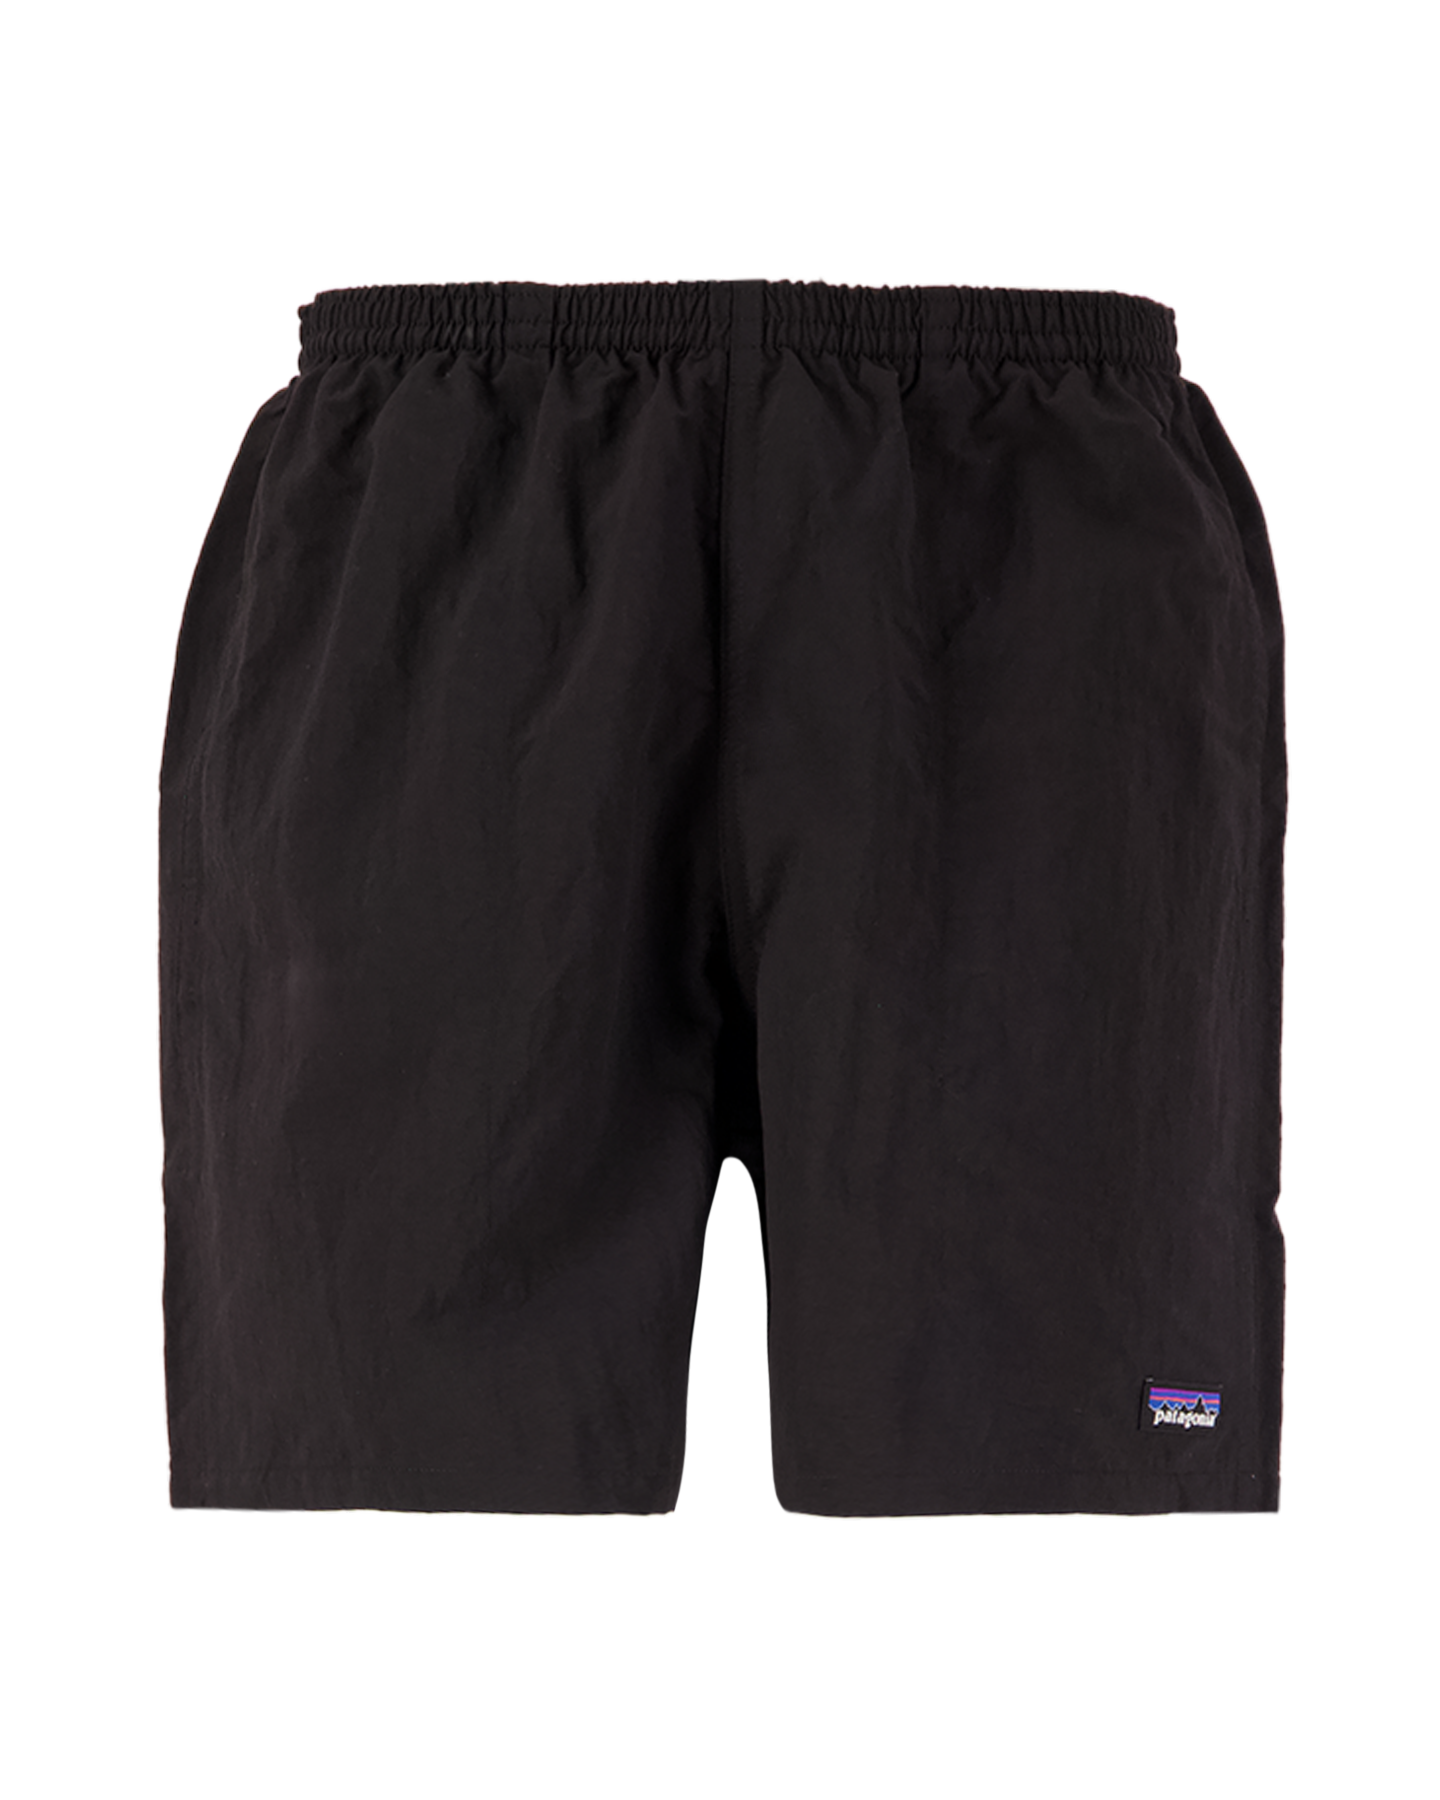 Patagonia M'S Baggies Shorts - 5 In. BLACK 1